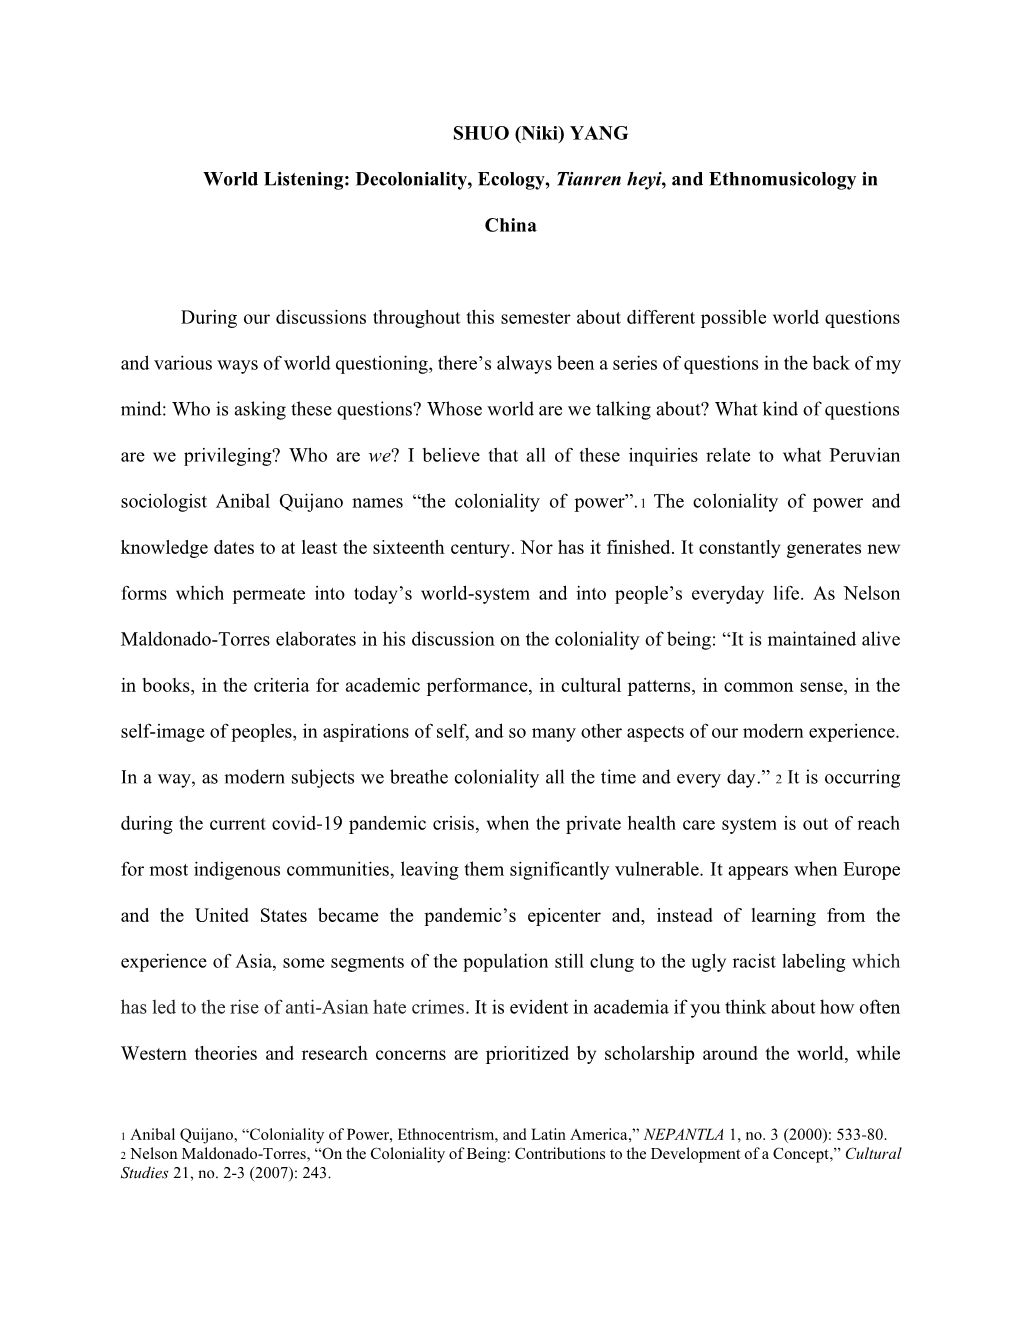 World Listening: Decoloniality, Tianren Heyi, and Ethnomusicology